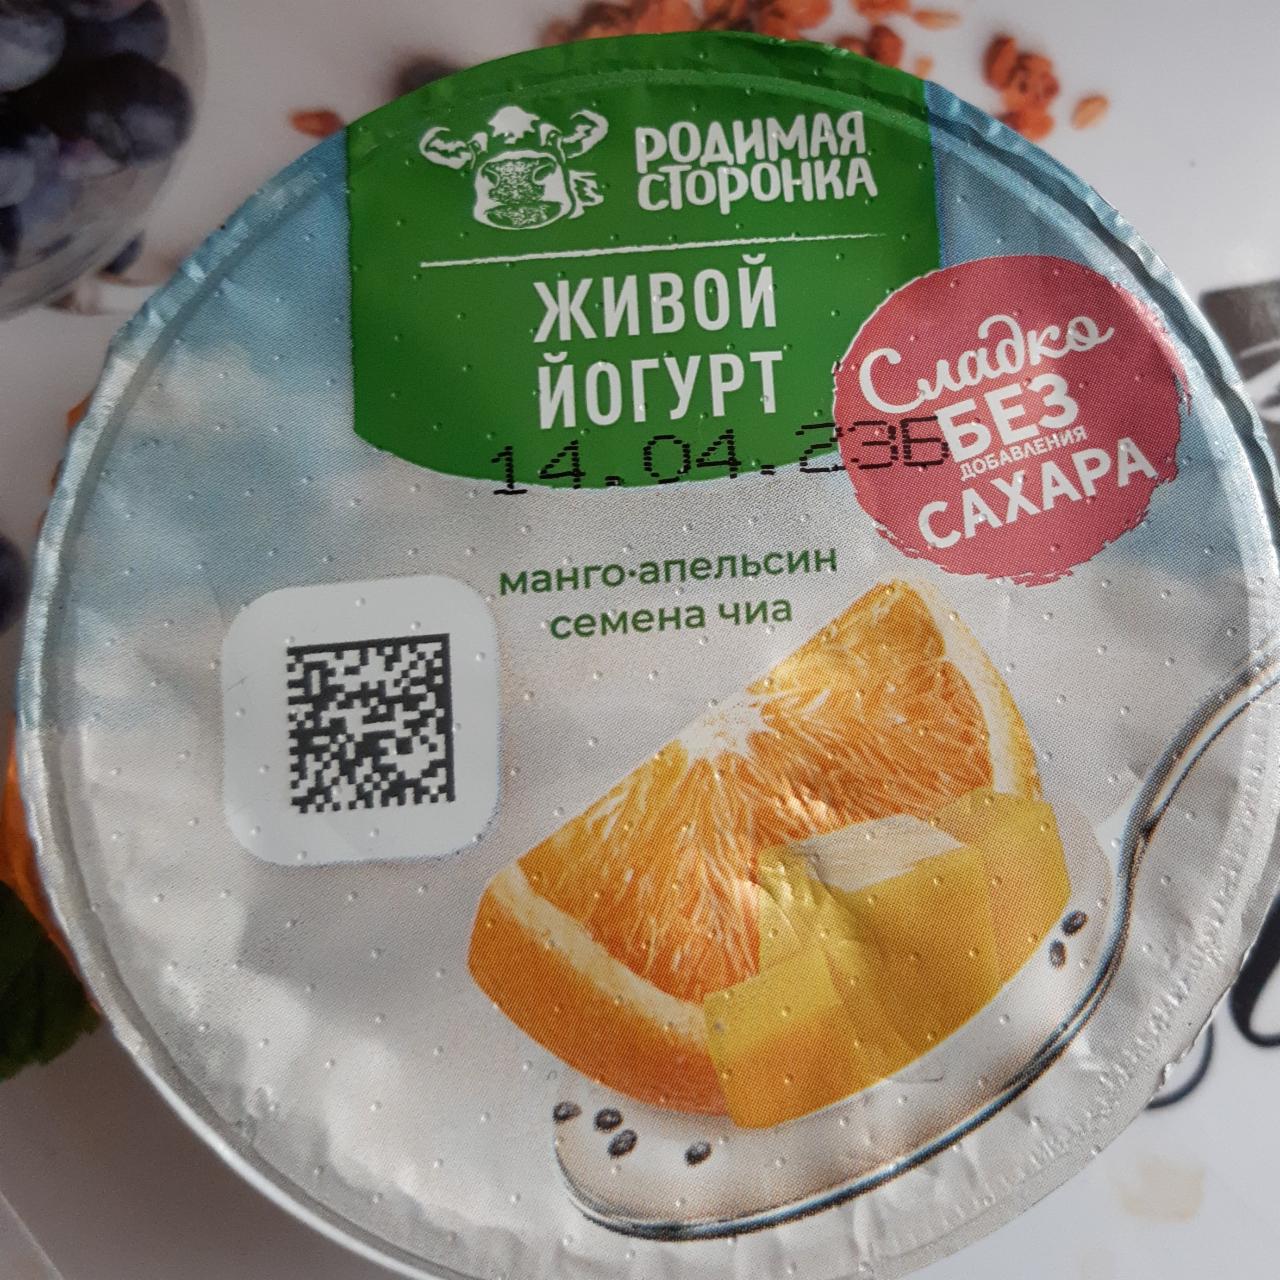 Фото - живой йогурт манго-апельсин-семена чиа Родимая сторонка